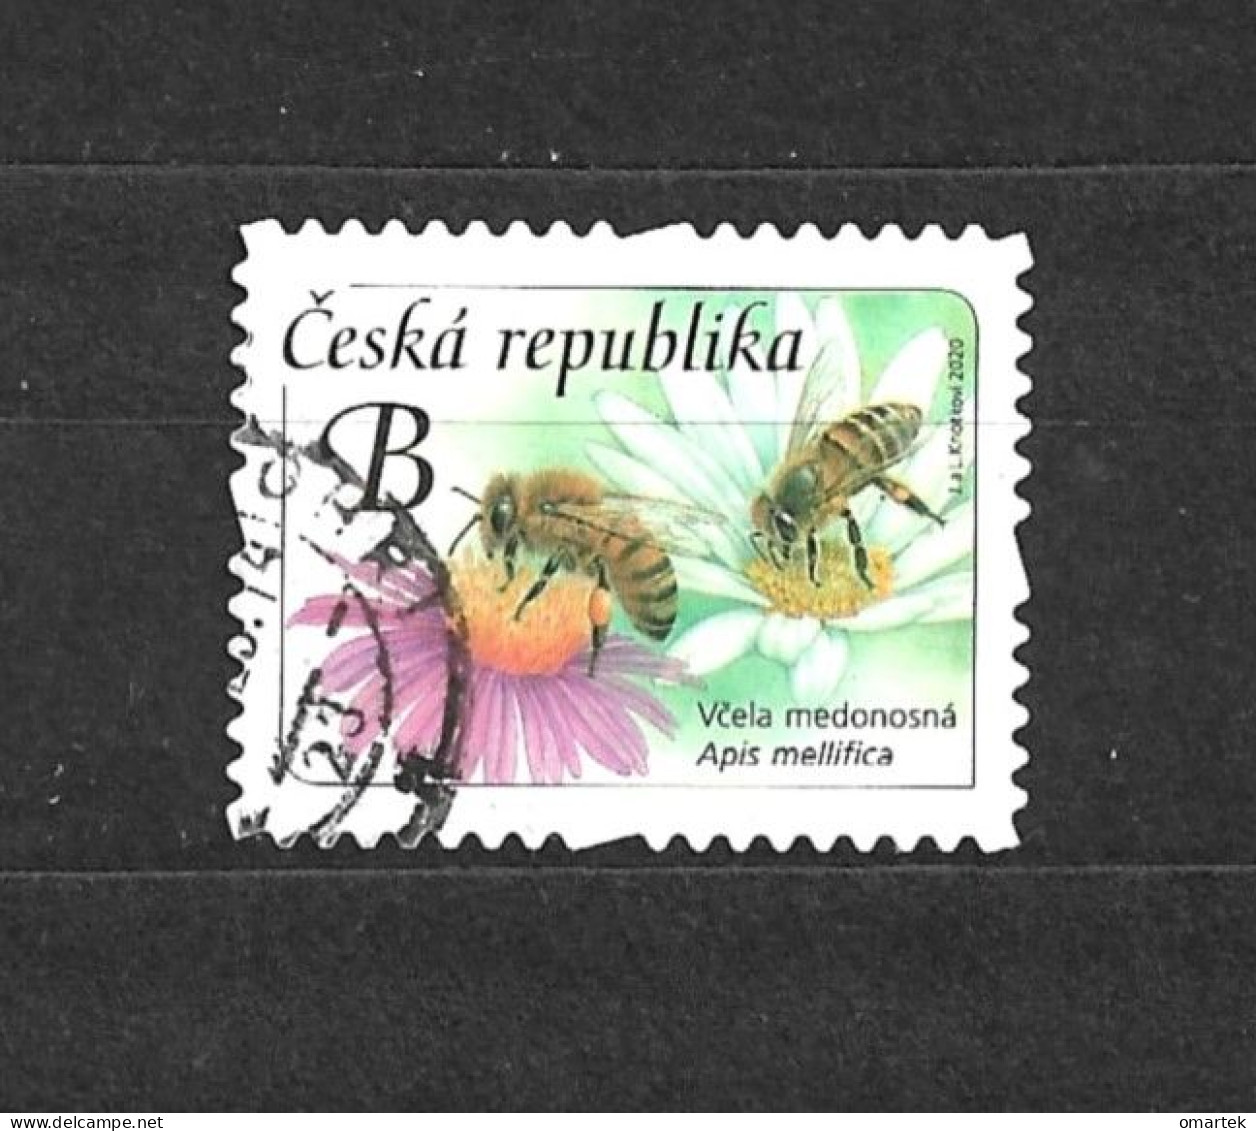 Czech Republic 2020 ⊙ Mi 1067 Sc 3824 Yt 943 Honey Bee. Tschechische Republik. C13 - Used Stamps